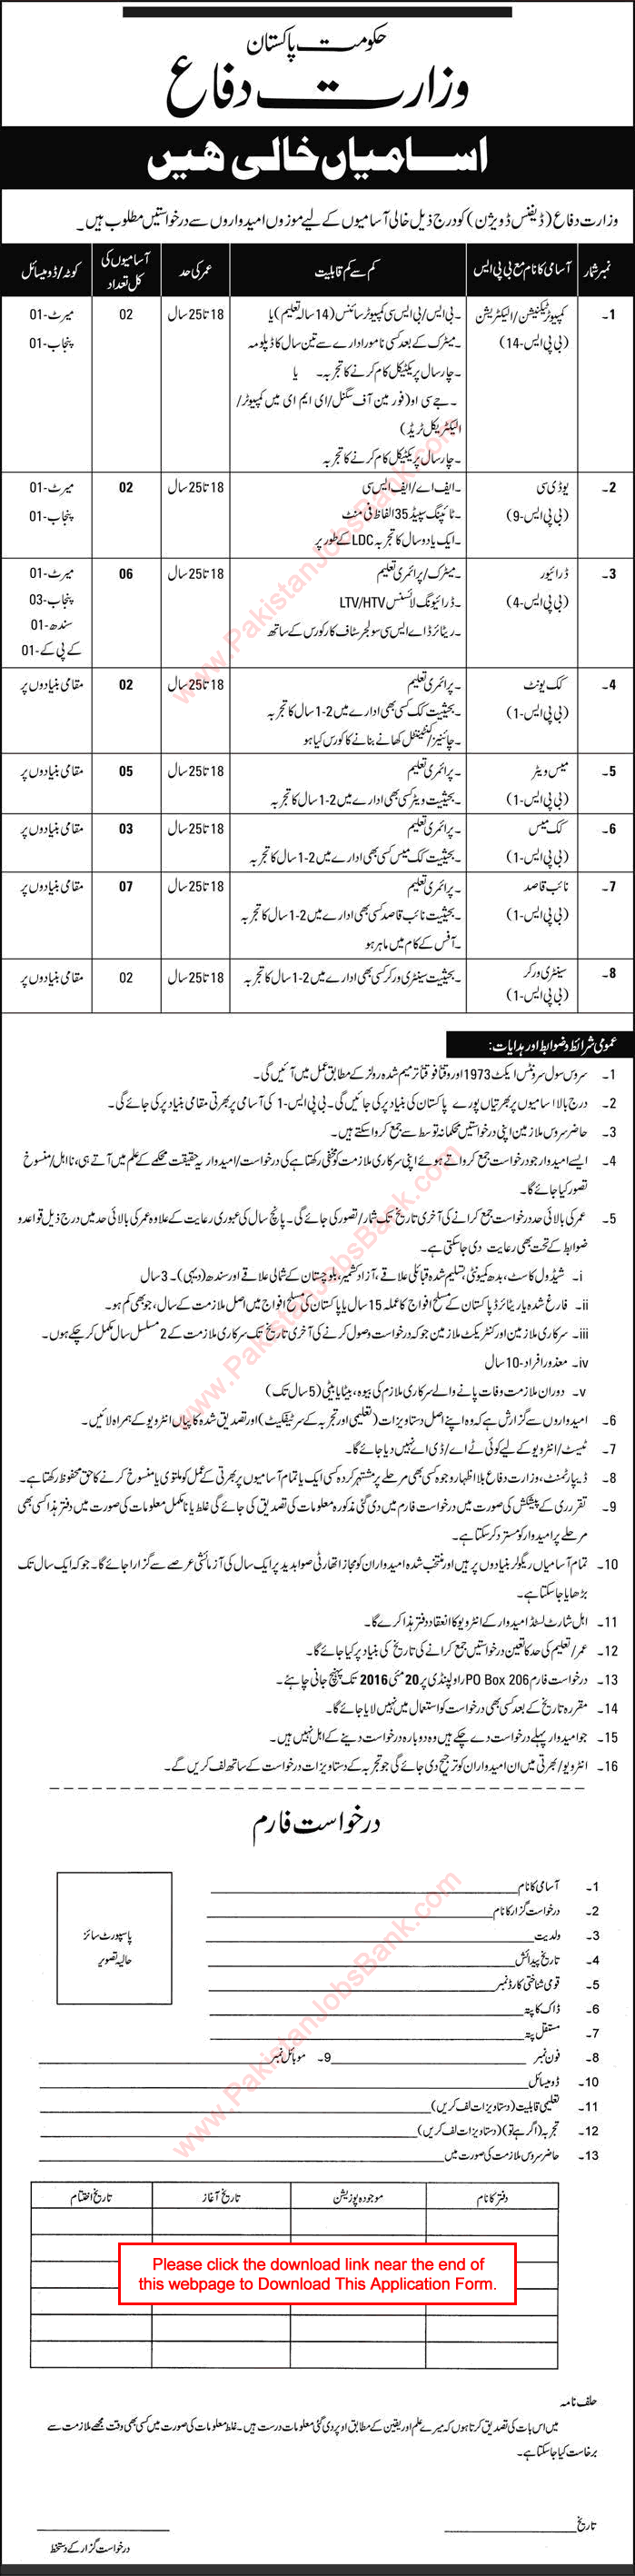 Ministry of Defence Jobs May 2016 Rawalpindi / Islamabad Application Form PO Box 206 Latest